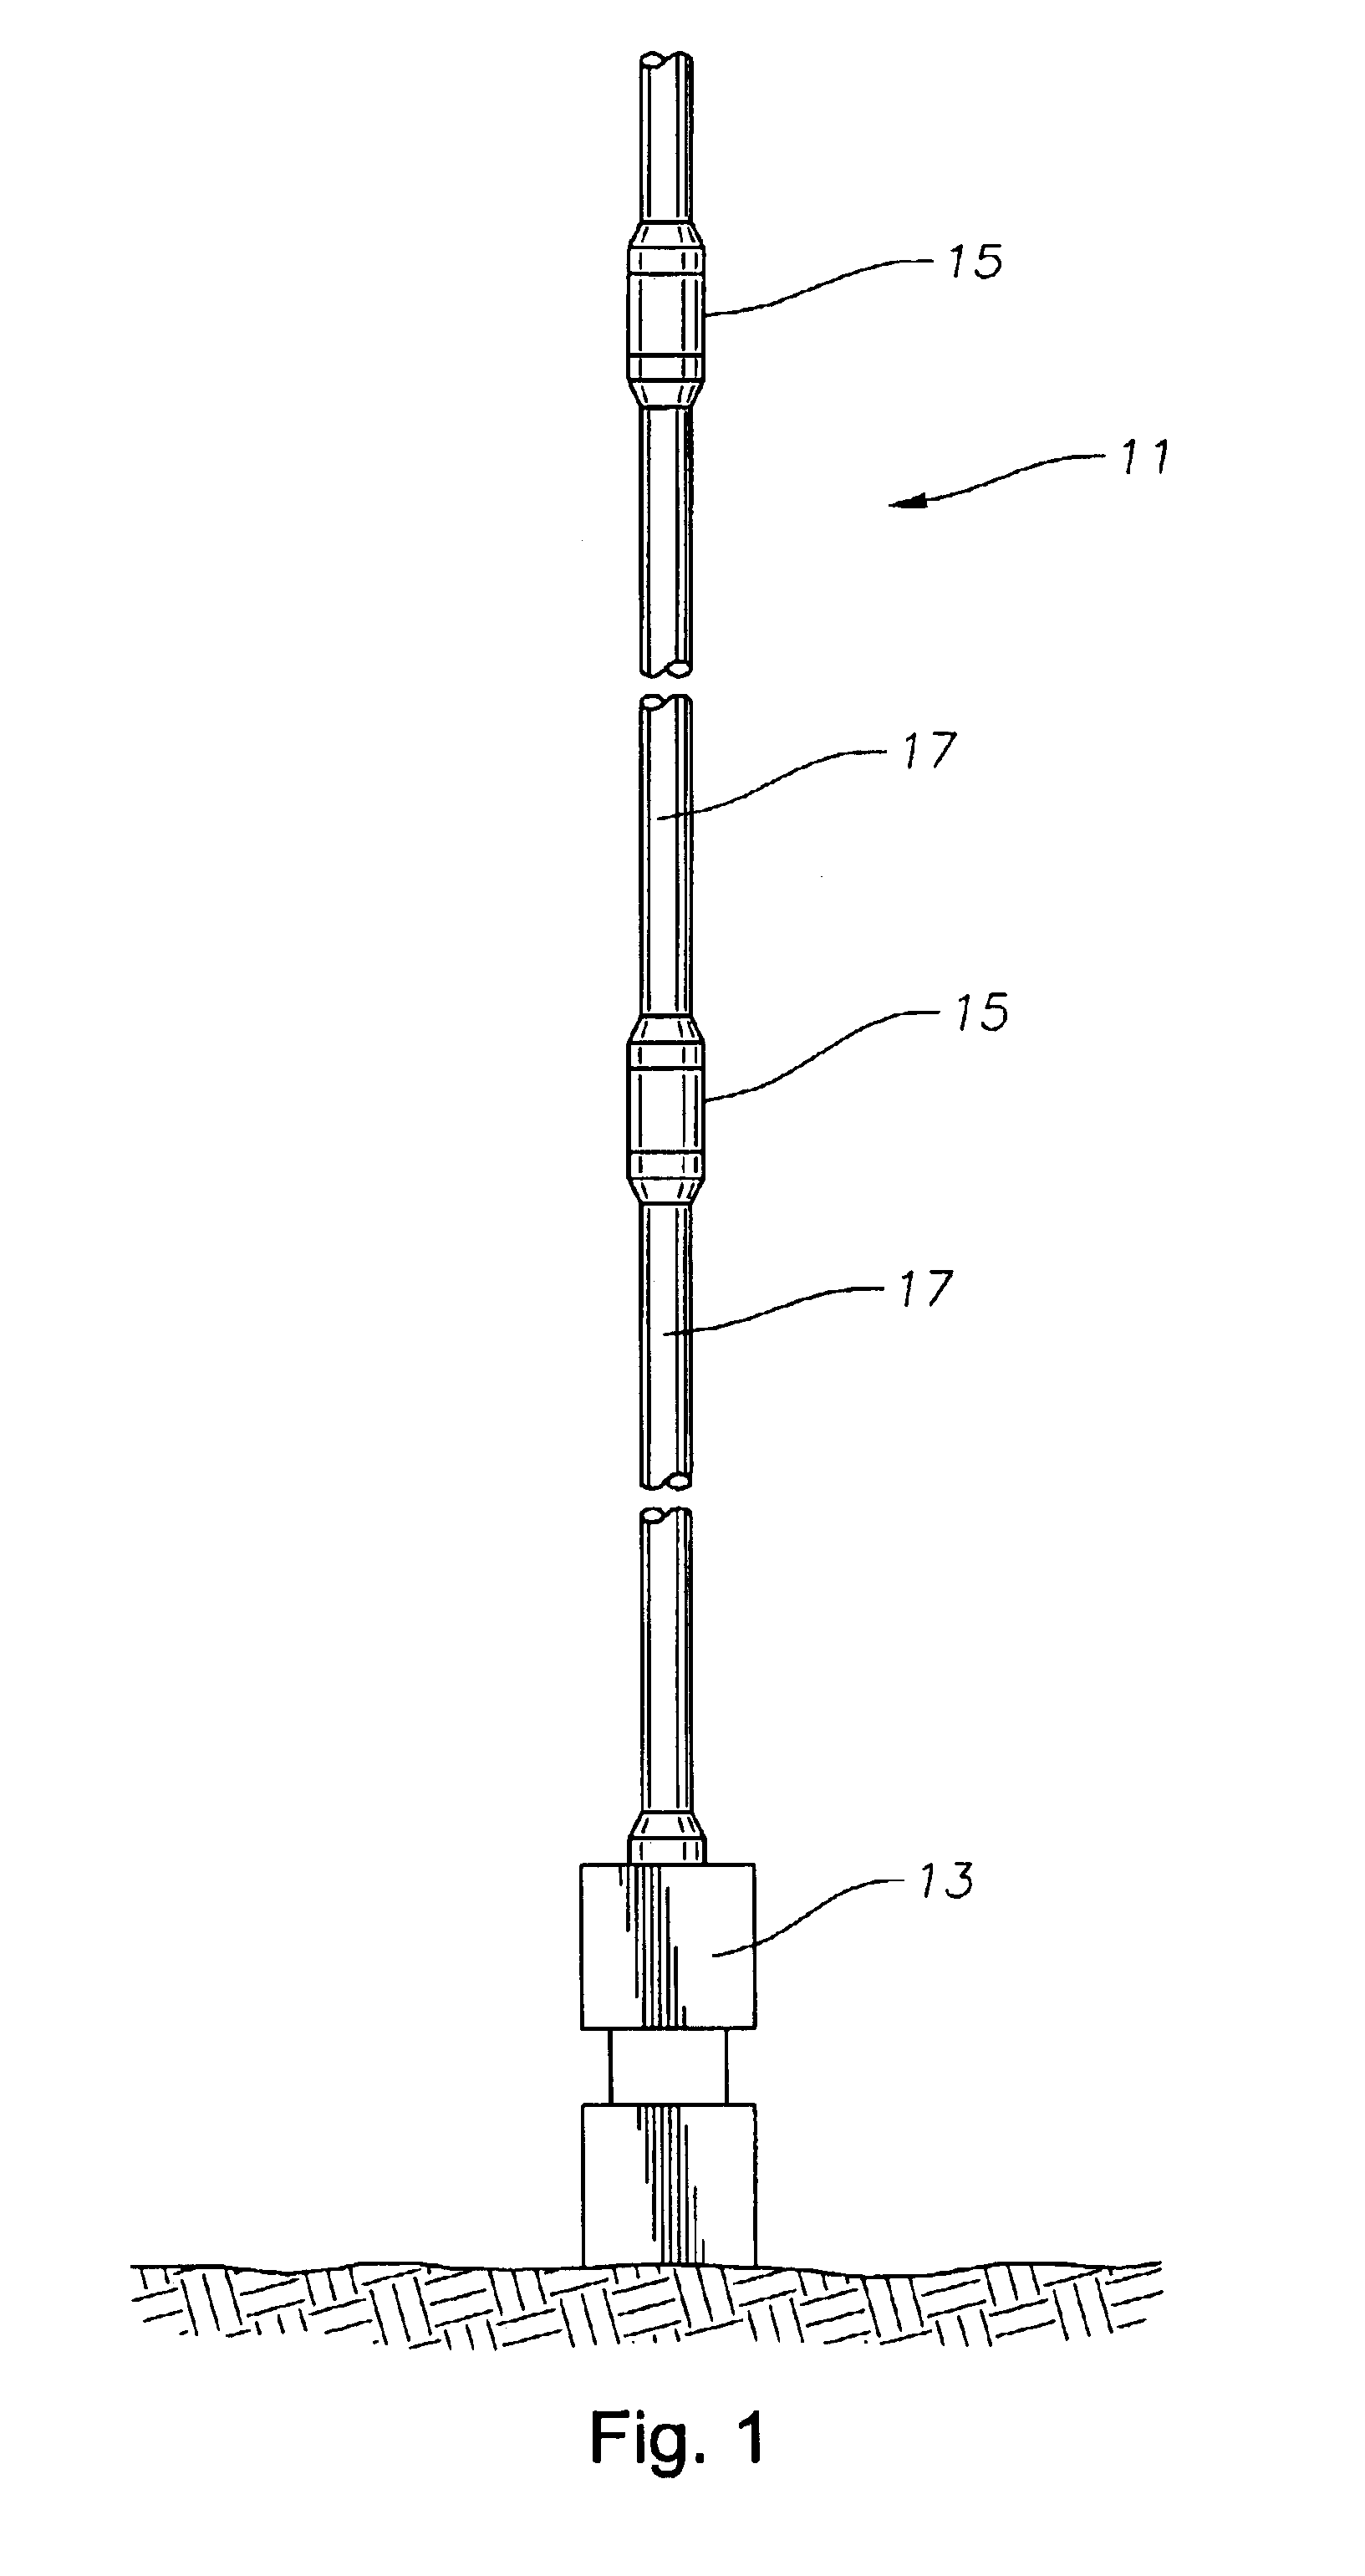 Breech lock connector for a subsea riser